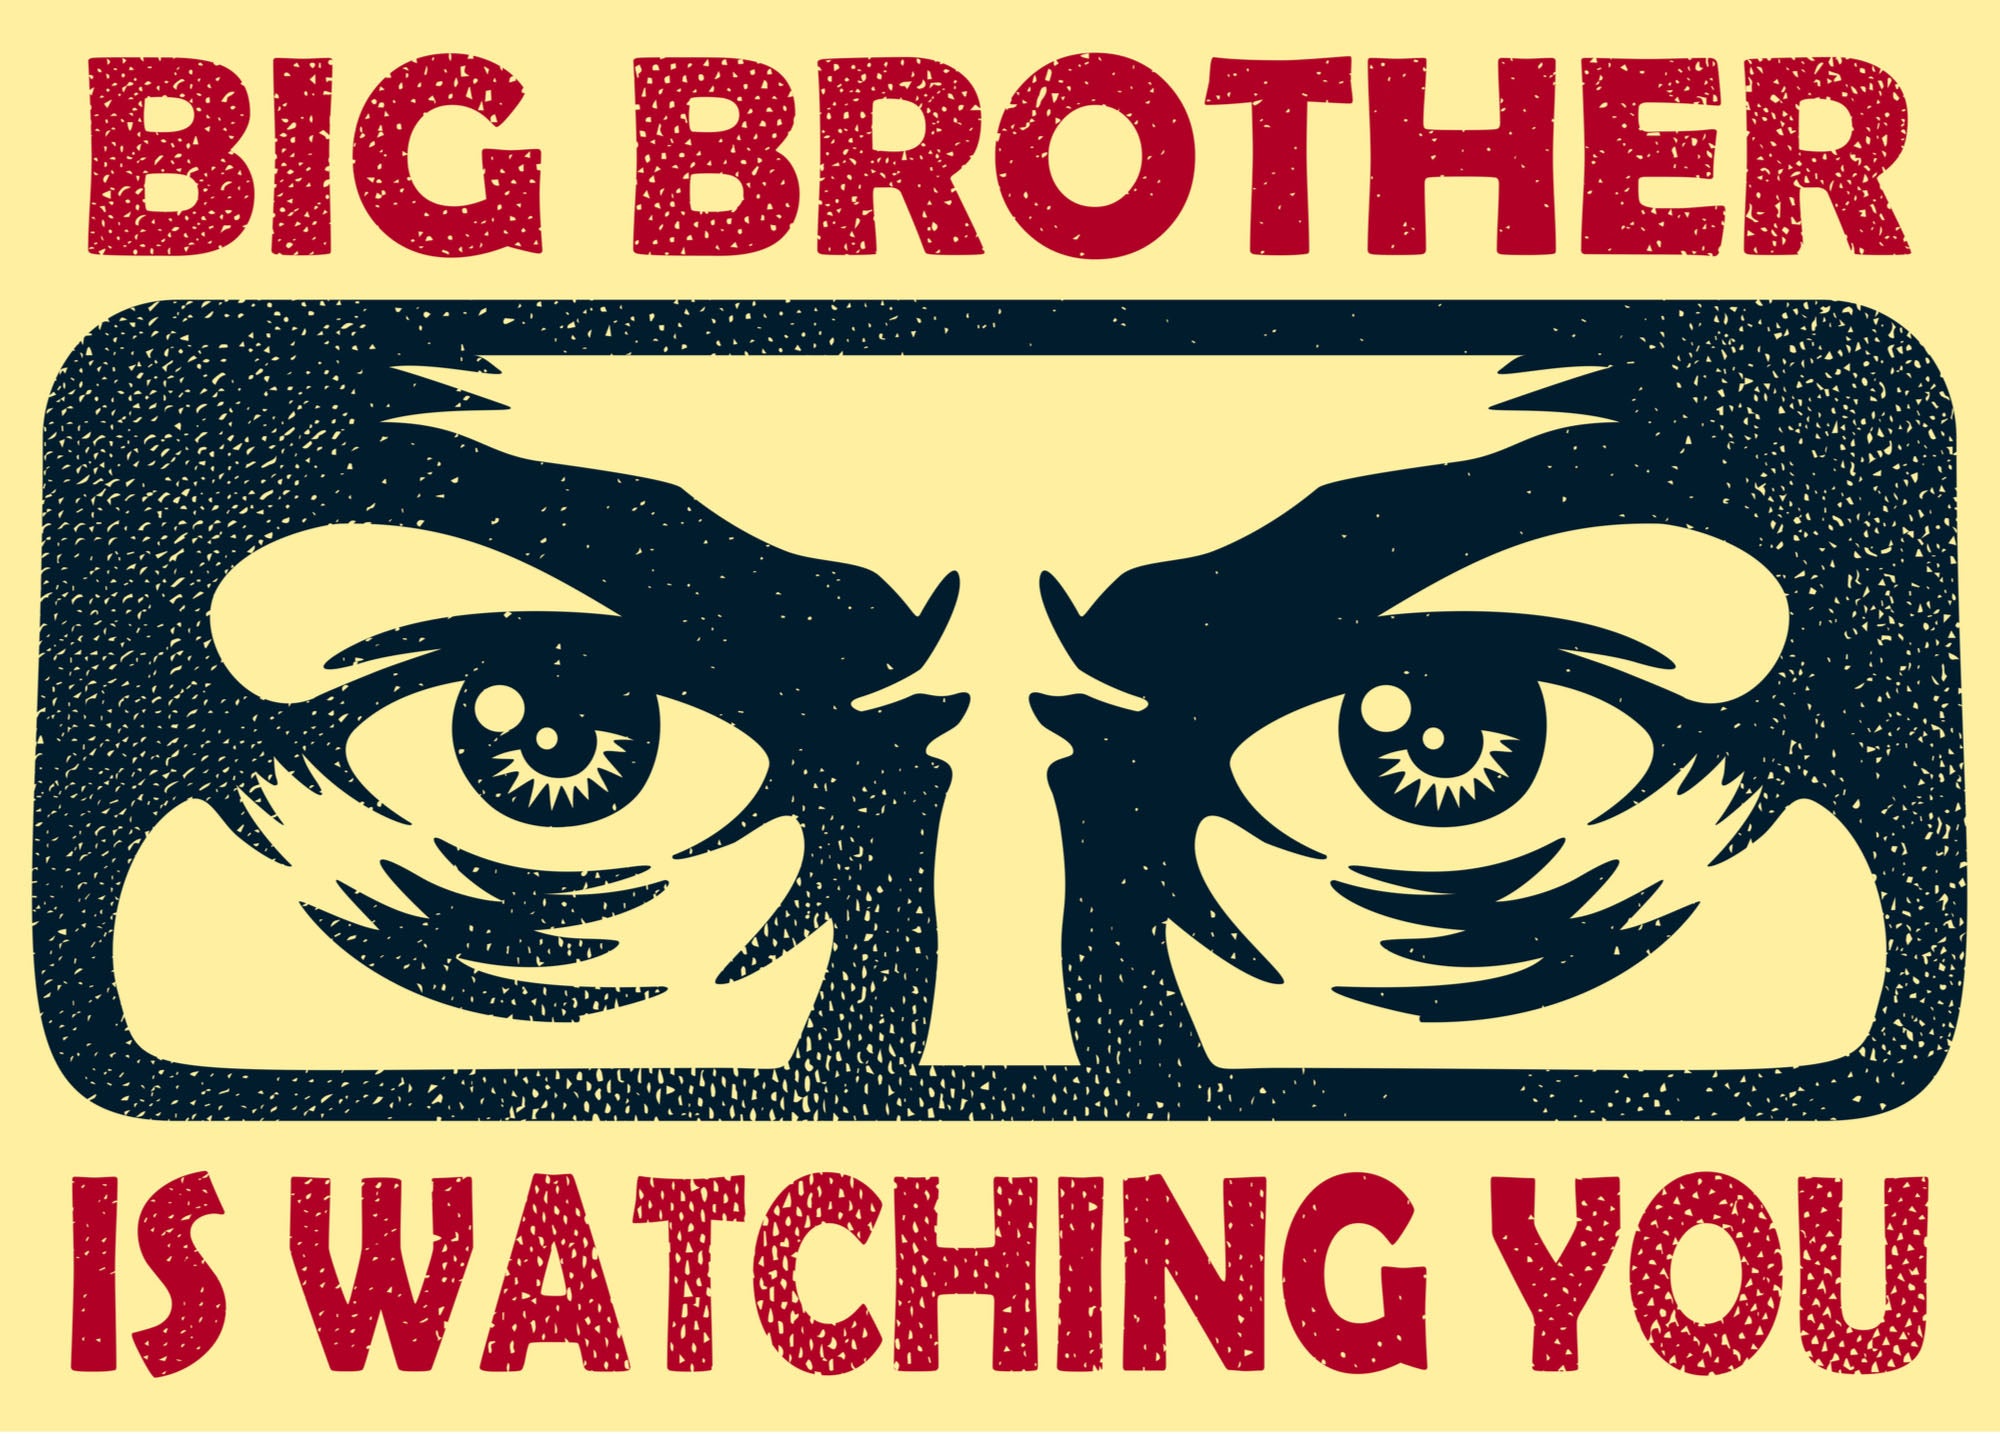 Fictional propaganda from George Orwell's 1984